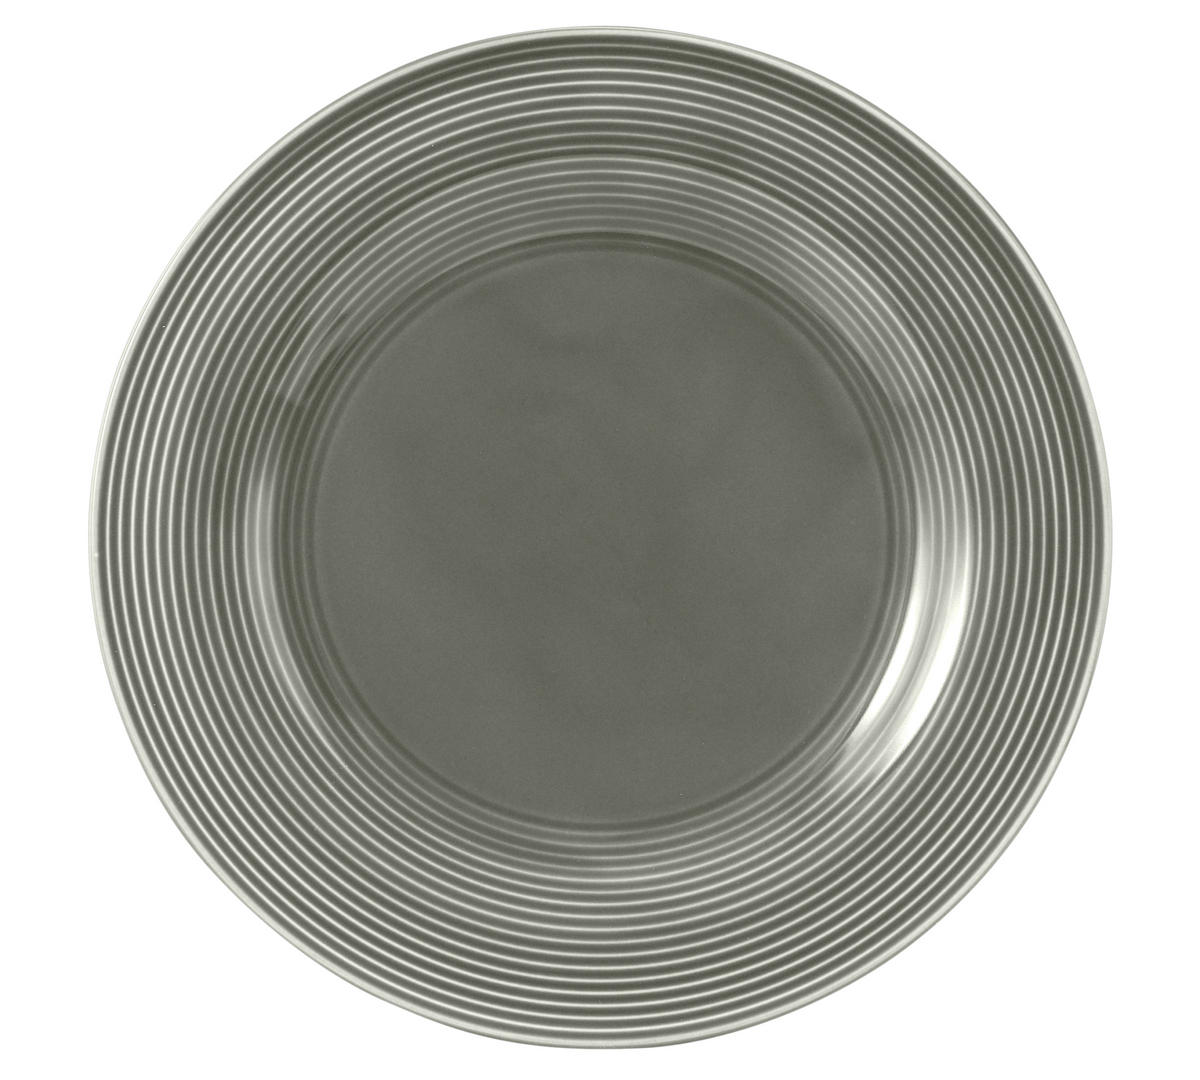 SPEISETELLER Beat perlgrau uni 27,7 cm  - Grau, LIFESTYLE, Keramik (27,7cm) - Seltmann Weiden